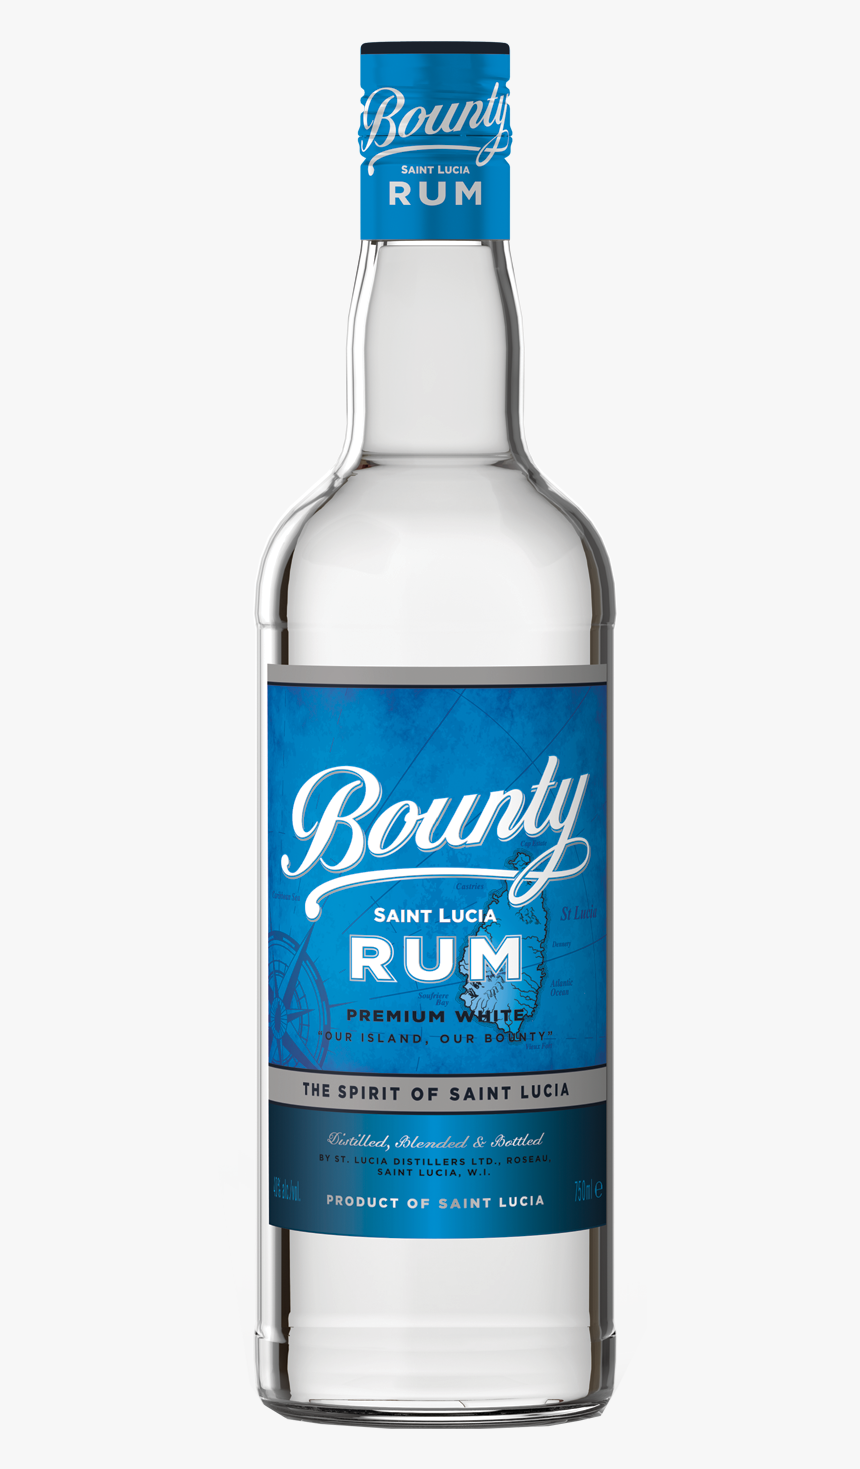 Bounty White Rum Product Description - Vodka, HD Png Download, Free Download